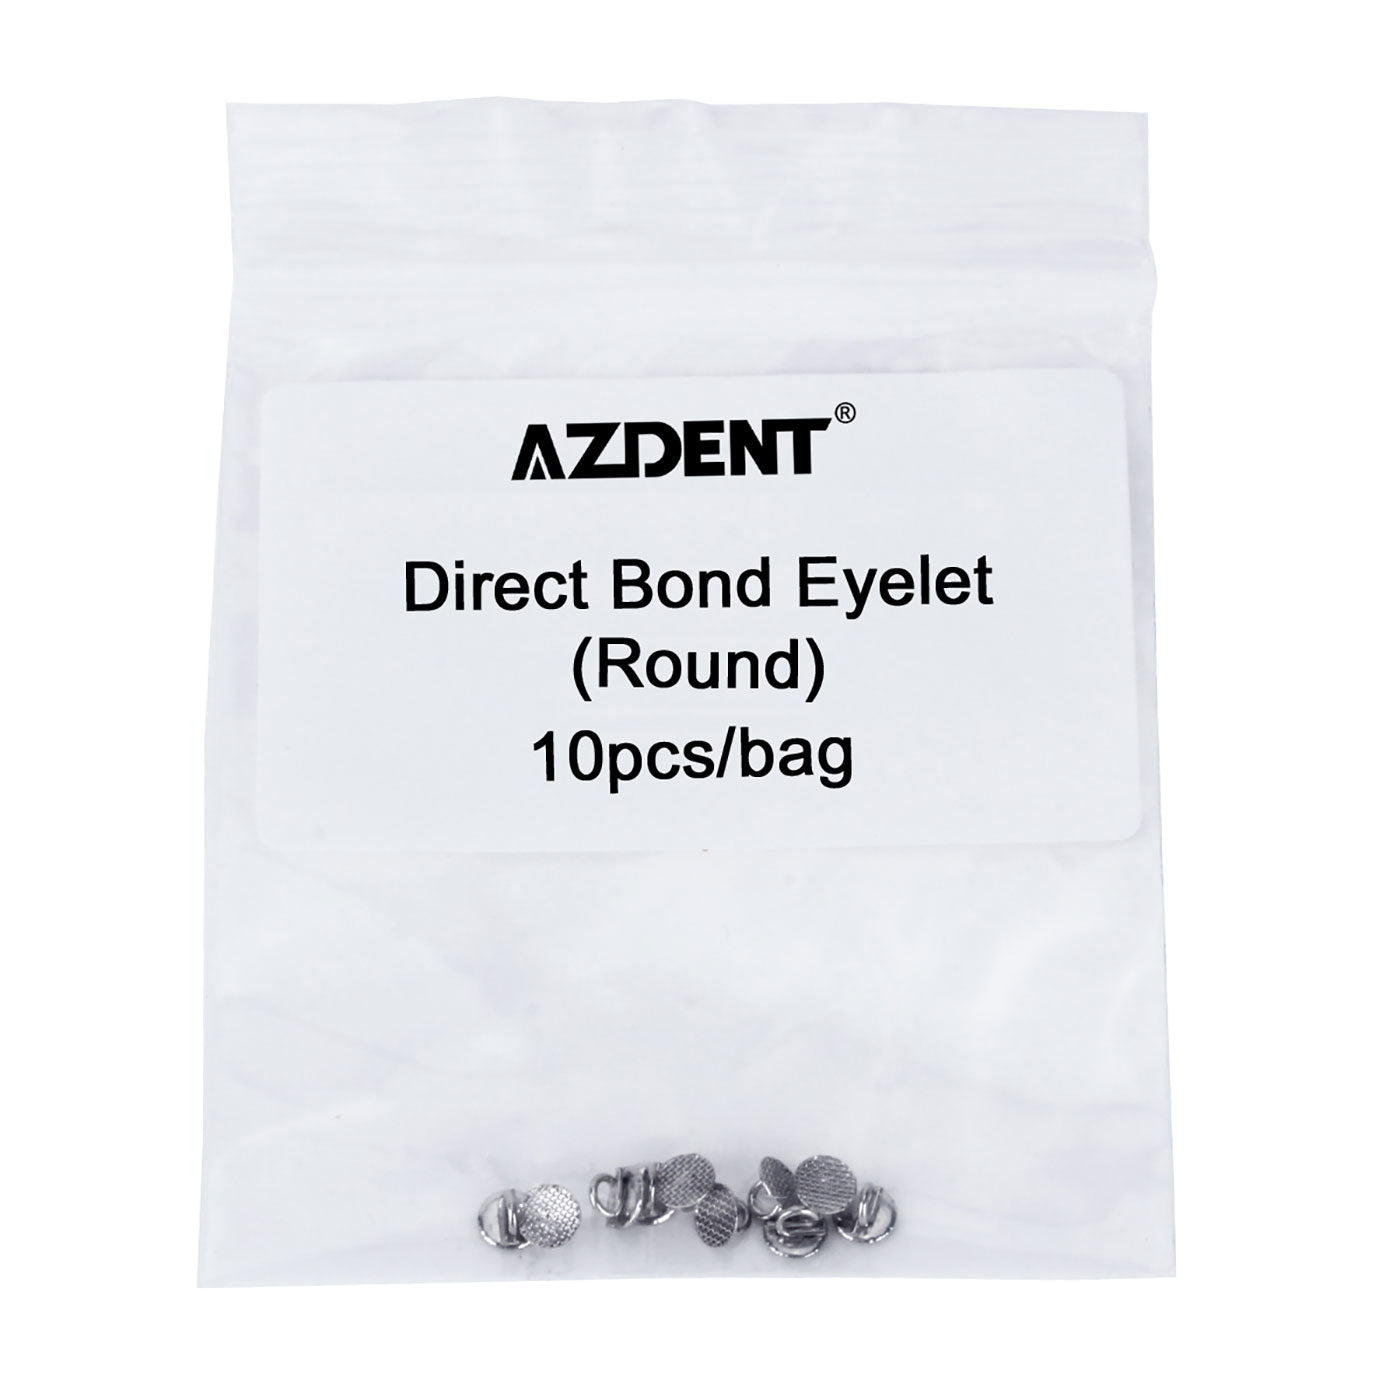 AZDENT Dental Lingual Buttons Direct Bond Eyelet Round/Rectangular Base 10/Bag - azdentall.com